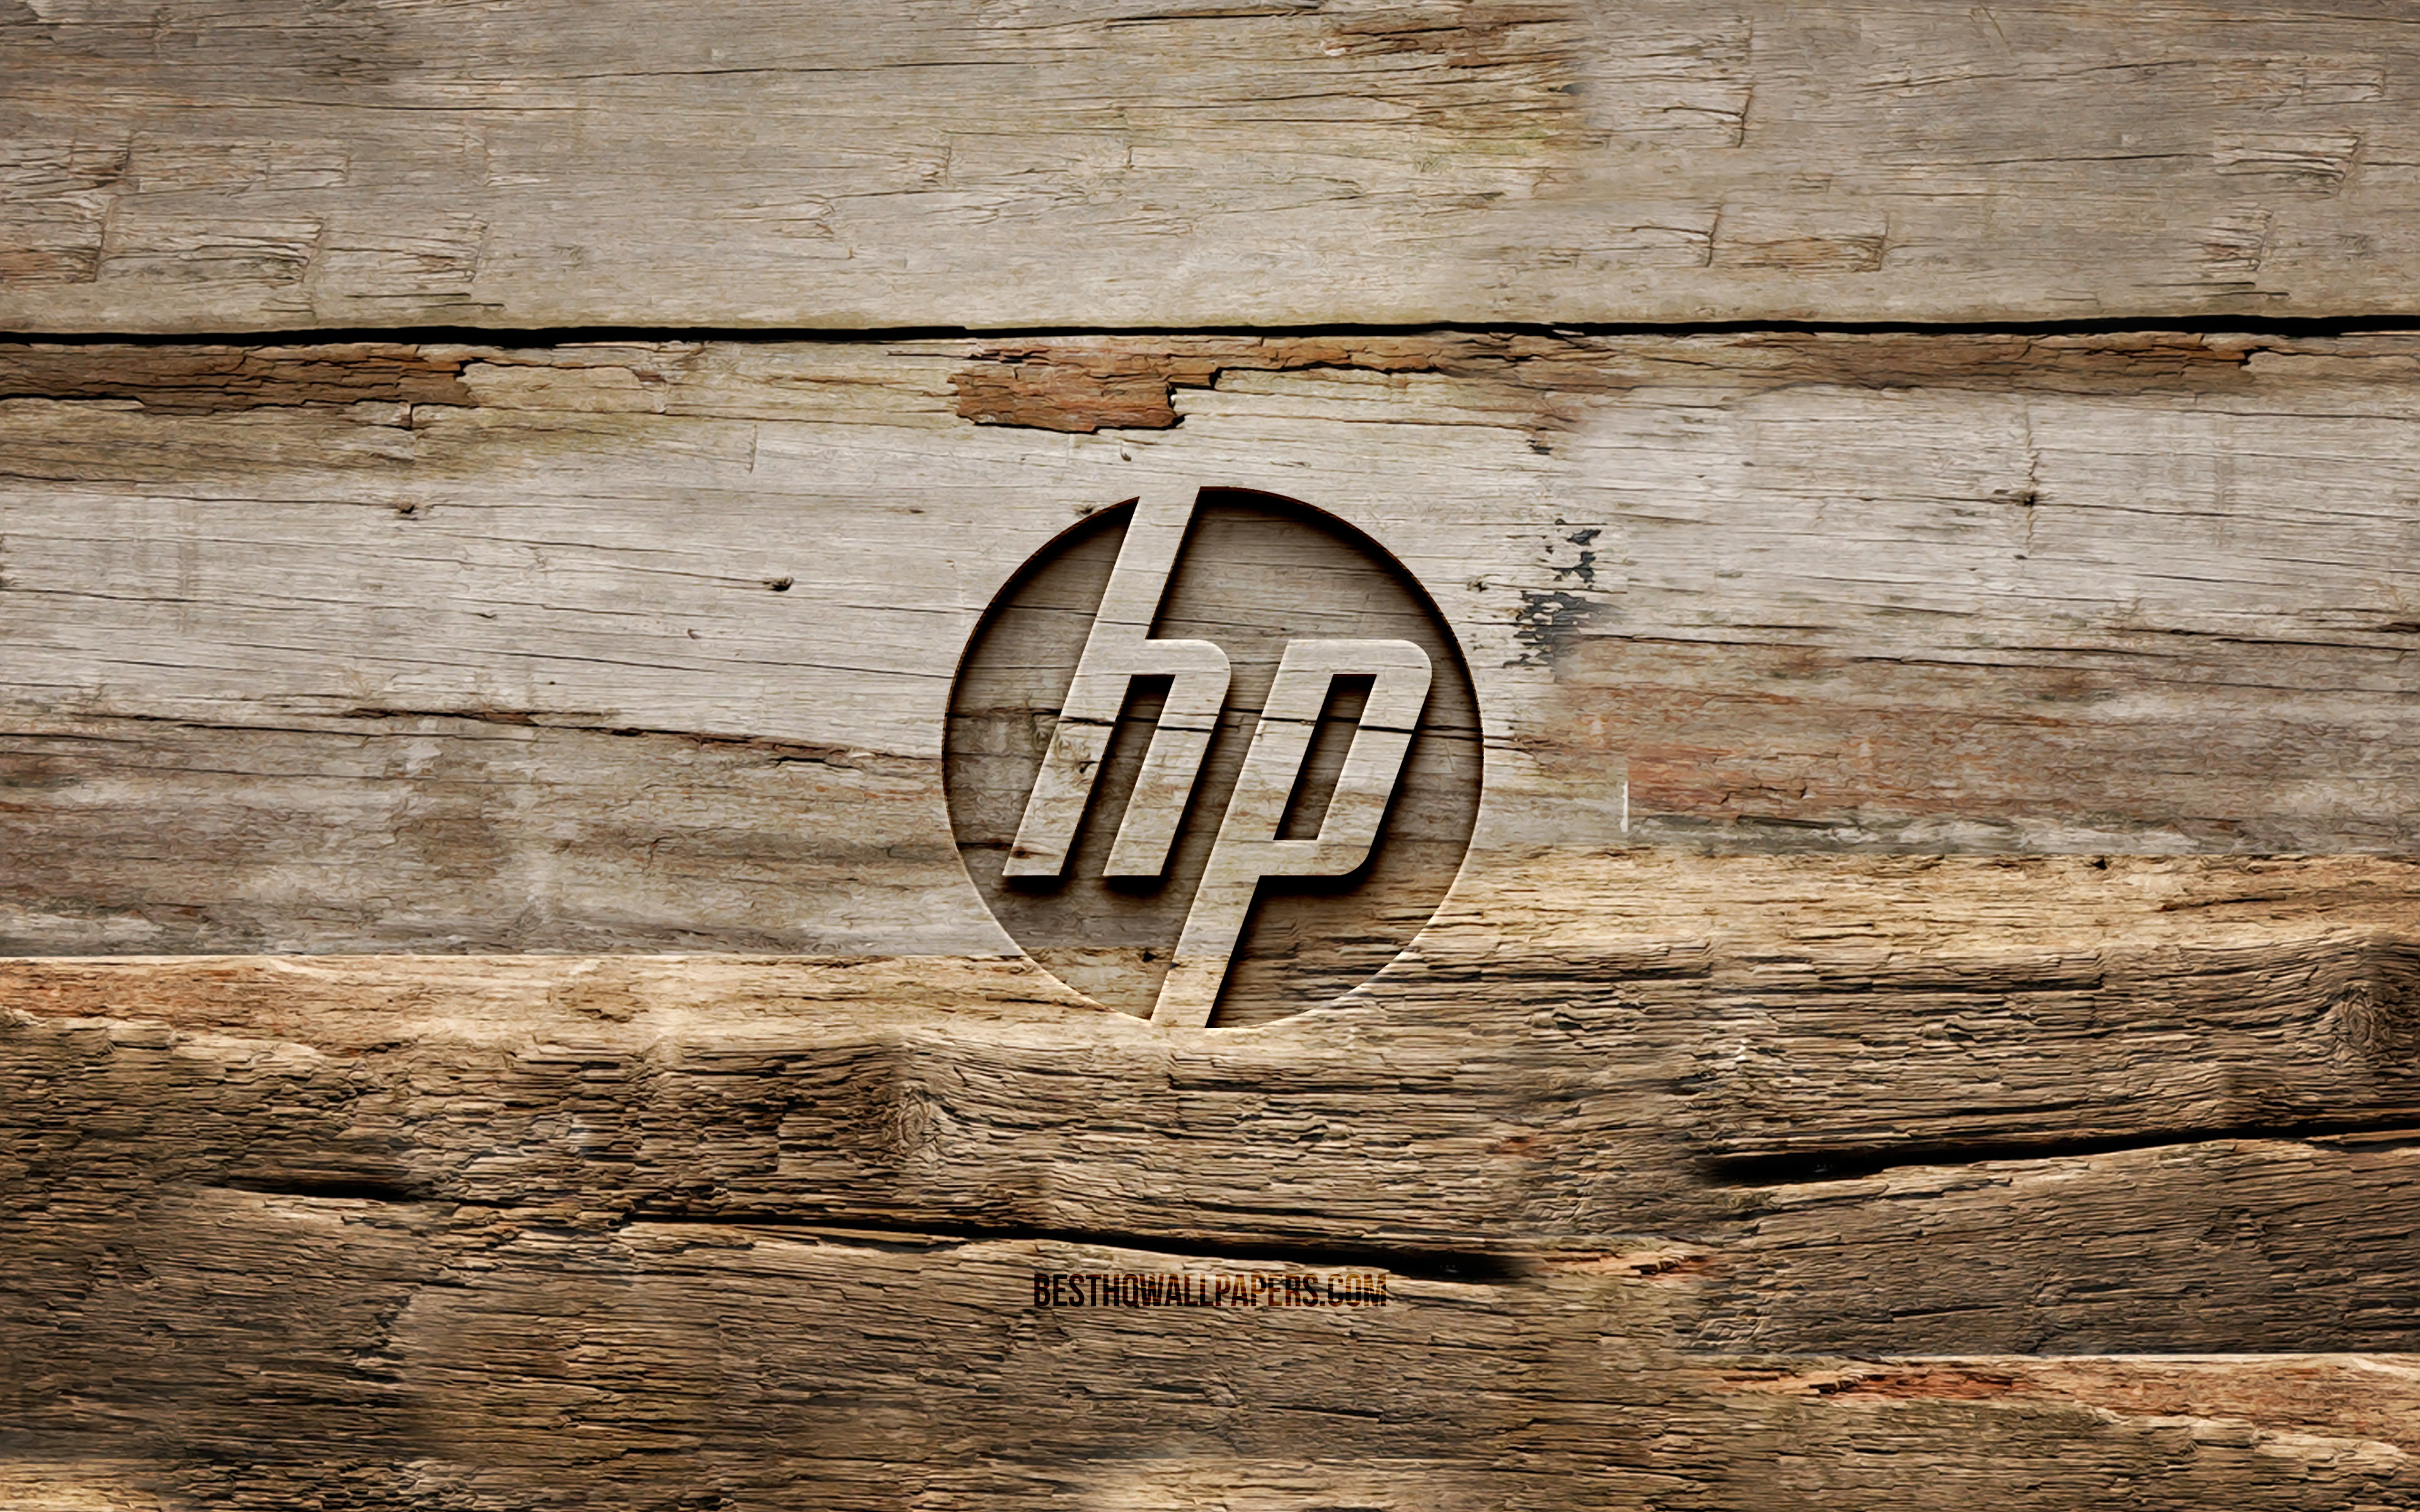 Download Wallpaper HP Wooden Logo, 4K, Hewlett Packard, Wooden Background, Brands, HP Logo, Creative, Wood Carving, Hewlett Packard Logo, HP, Hewlett Packard Wooden Logo For Desktop With Resolution 3840x2400. High Quality HD Picture Wallpaper